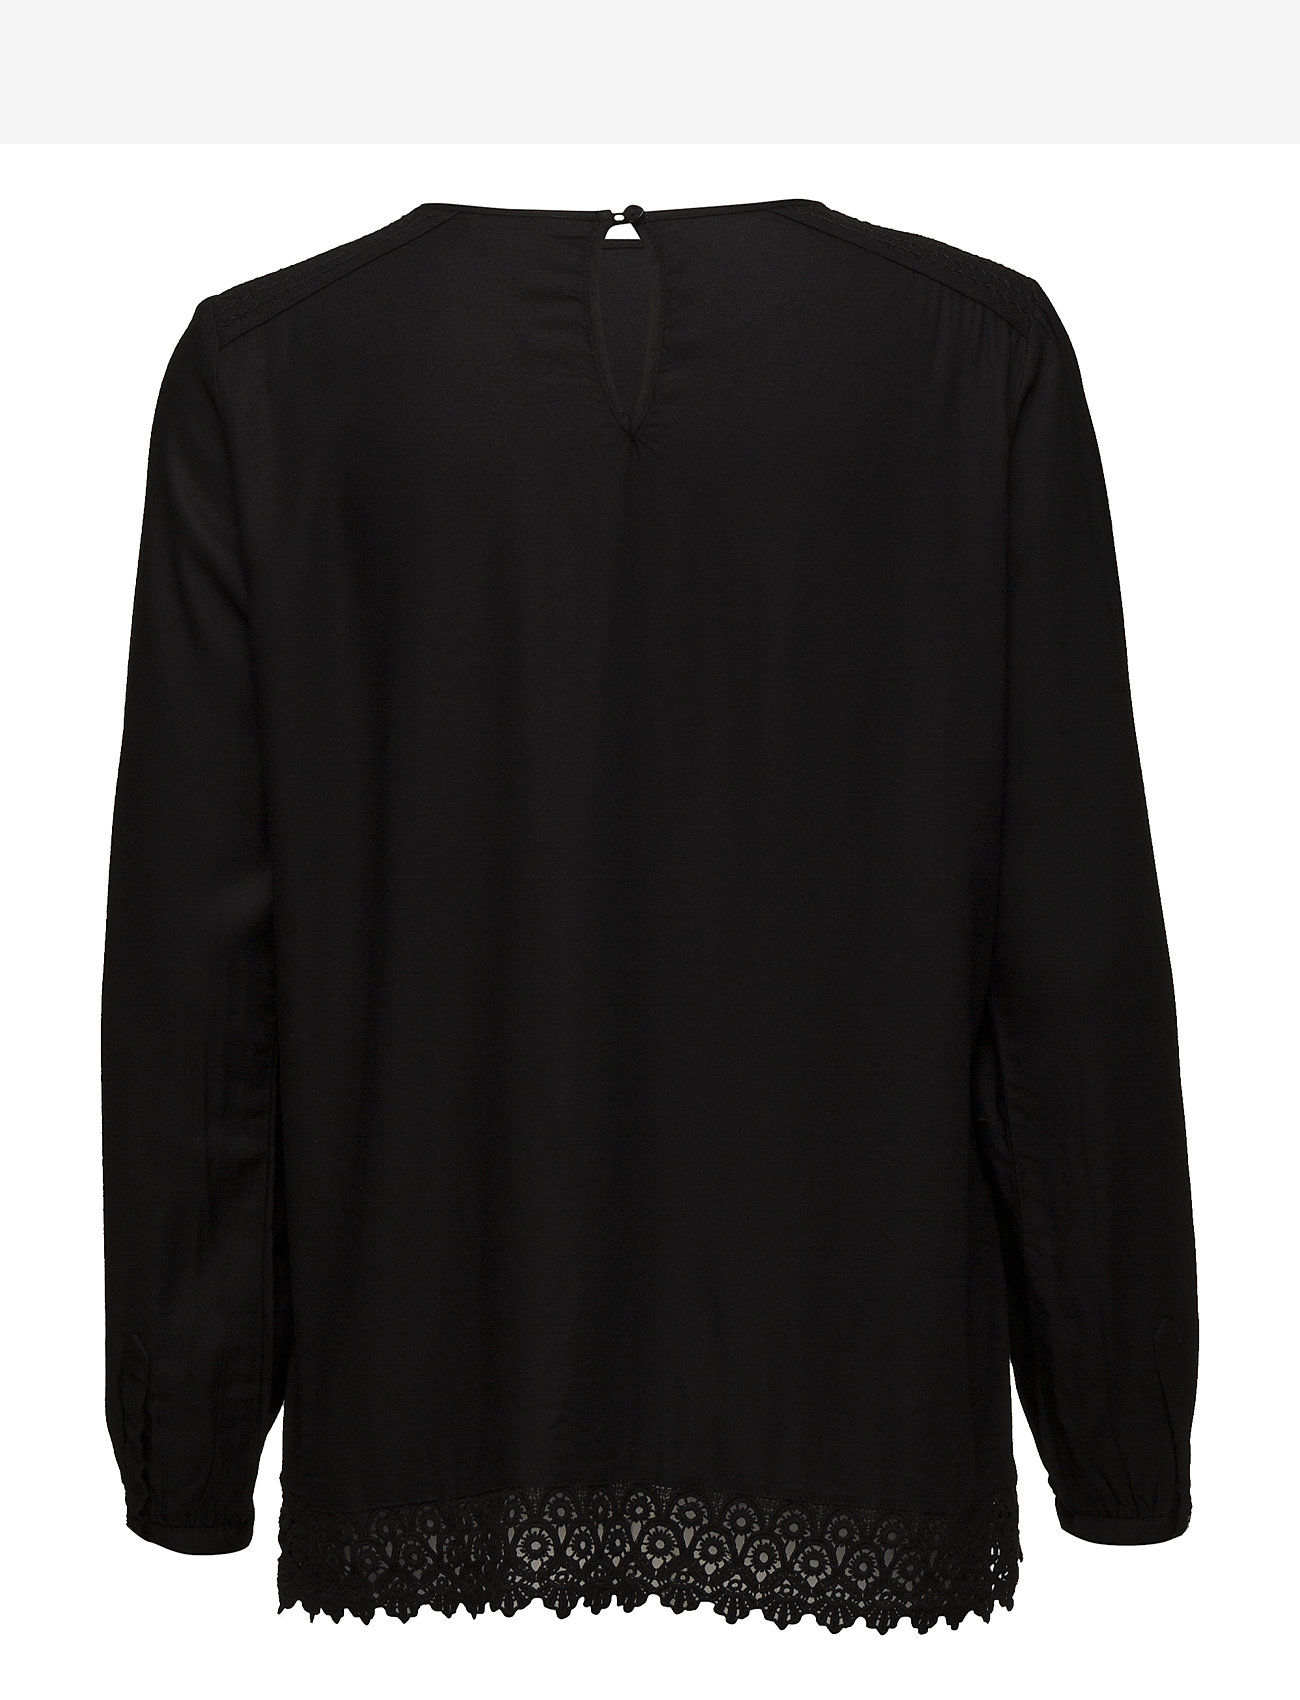 Signal - Shirts - long-sleeved blouses - black - 1